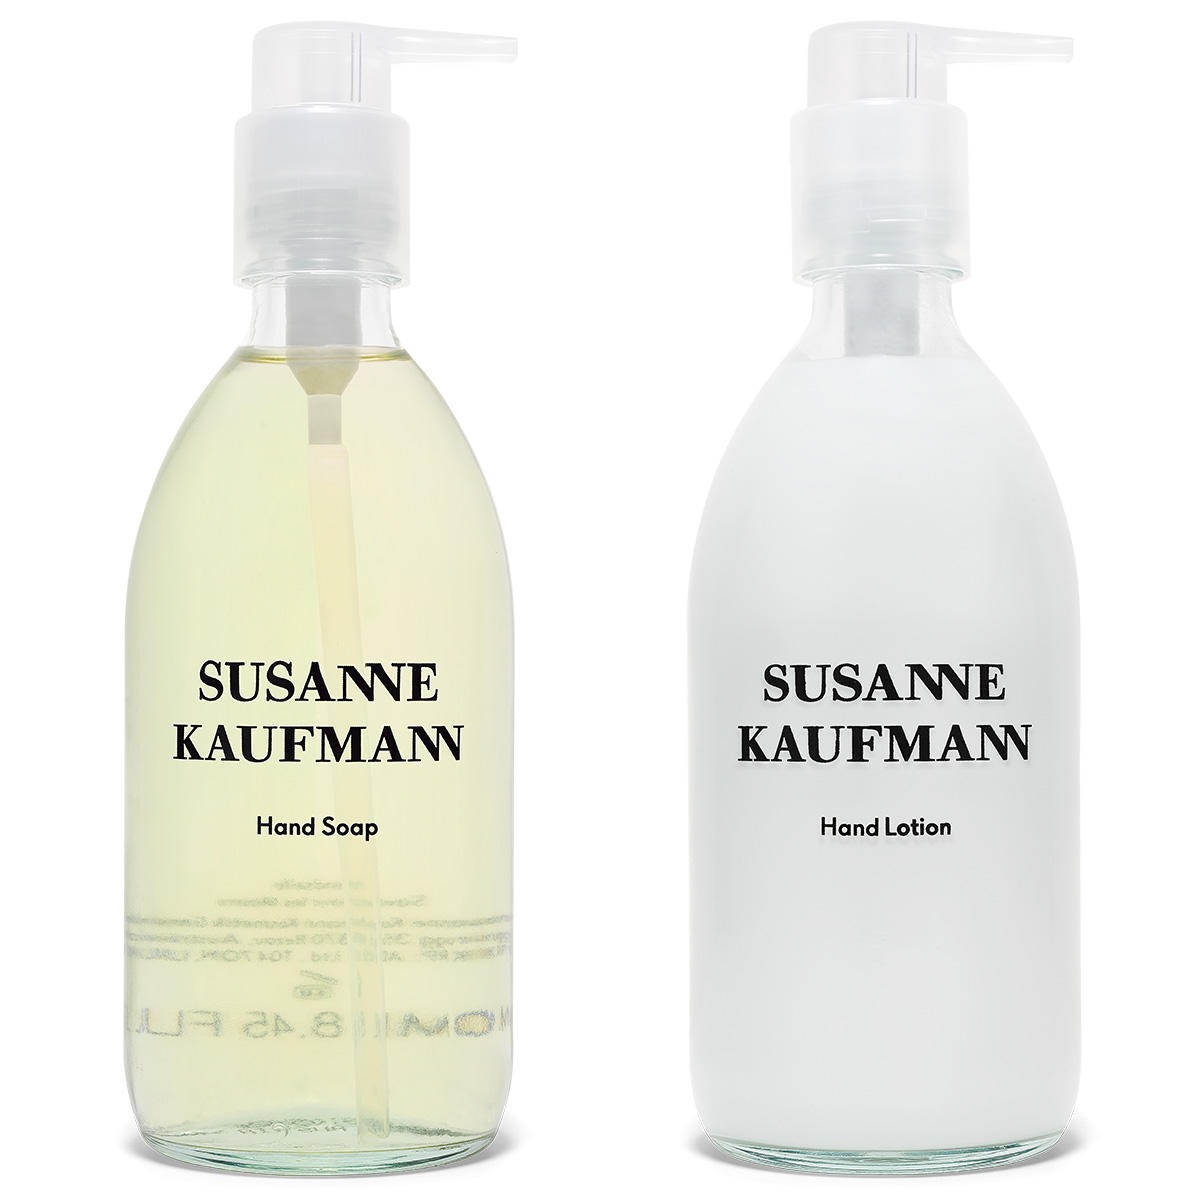 Susanne Kaufmann Hand Soap & Hand Lotion 2 x 250 ml - 2